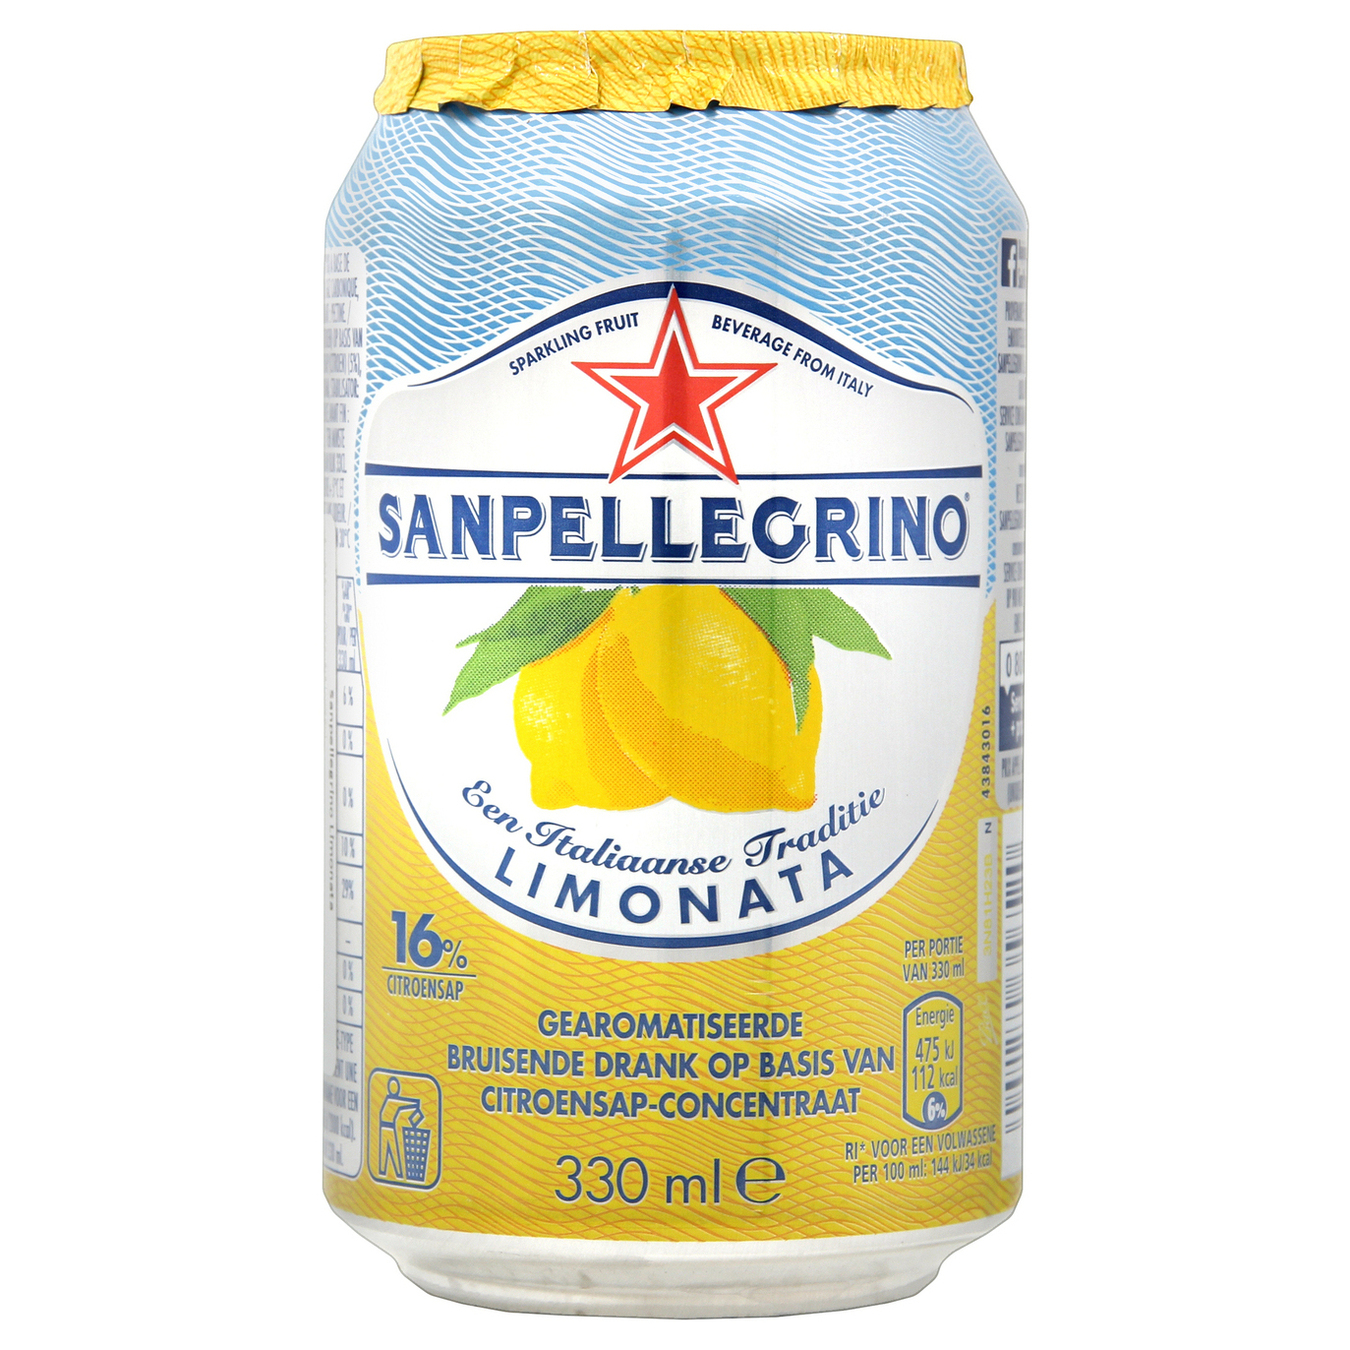 Sanpellegrino Non-alcoholic drink Limonata with lemon juice carbonated 330ml